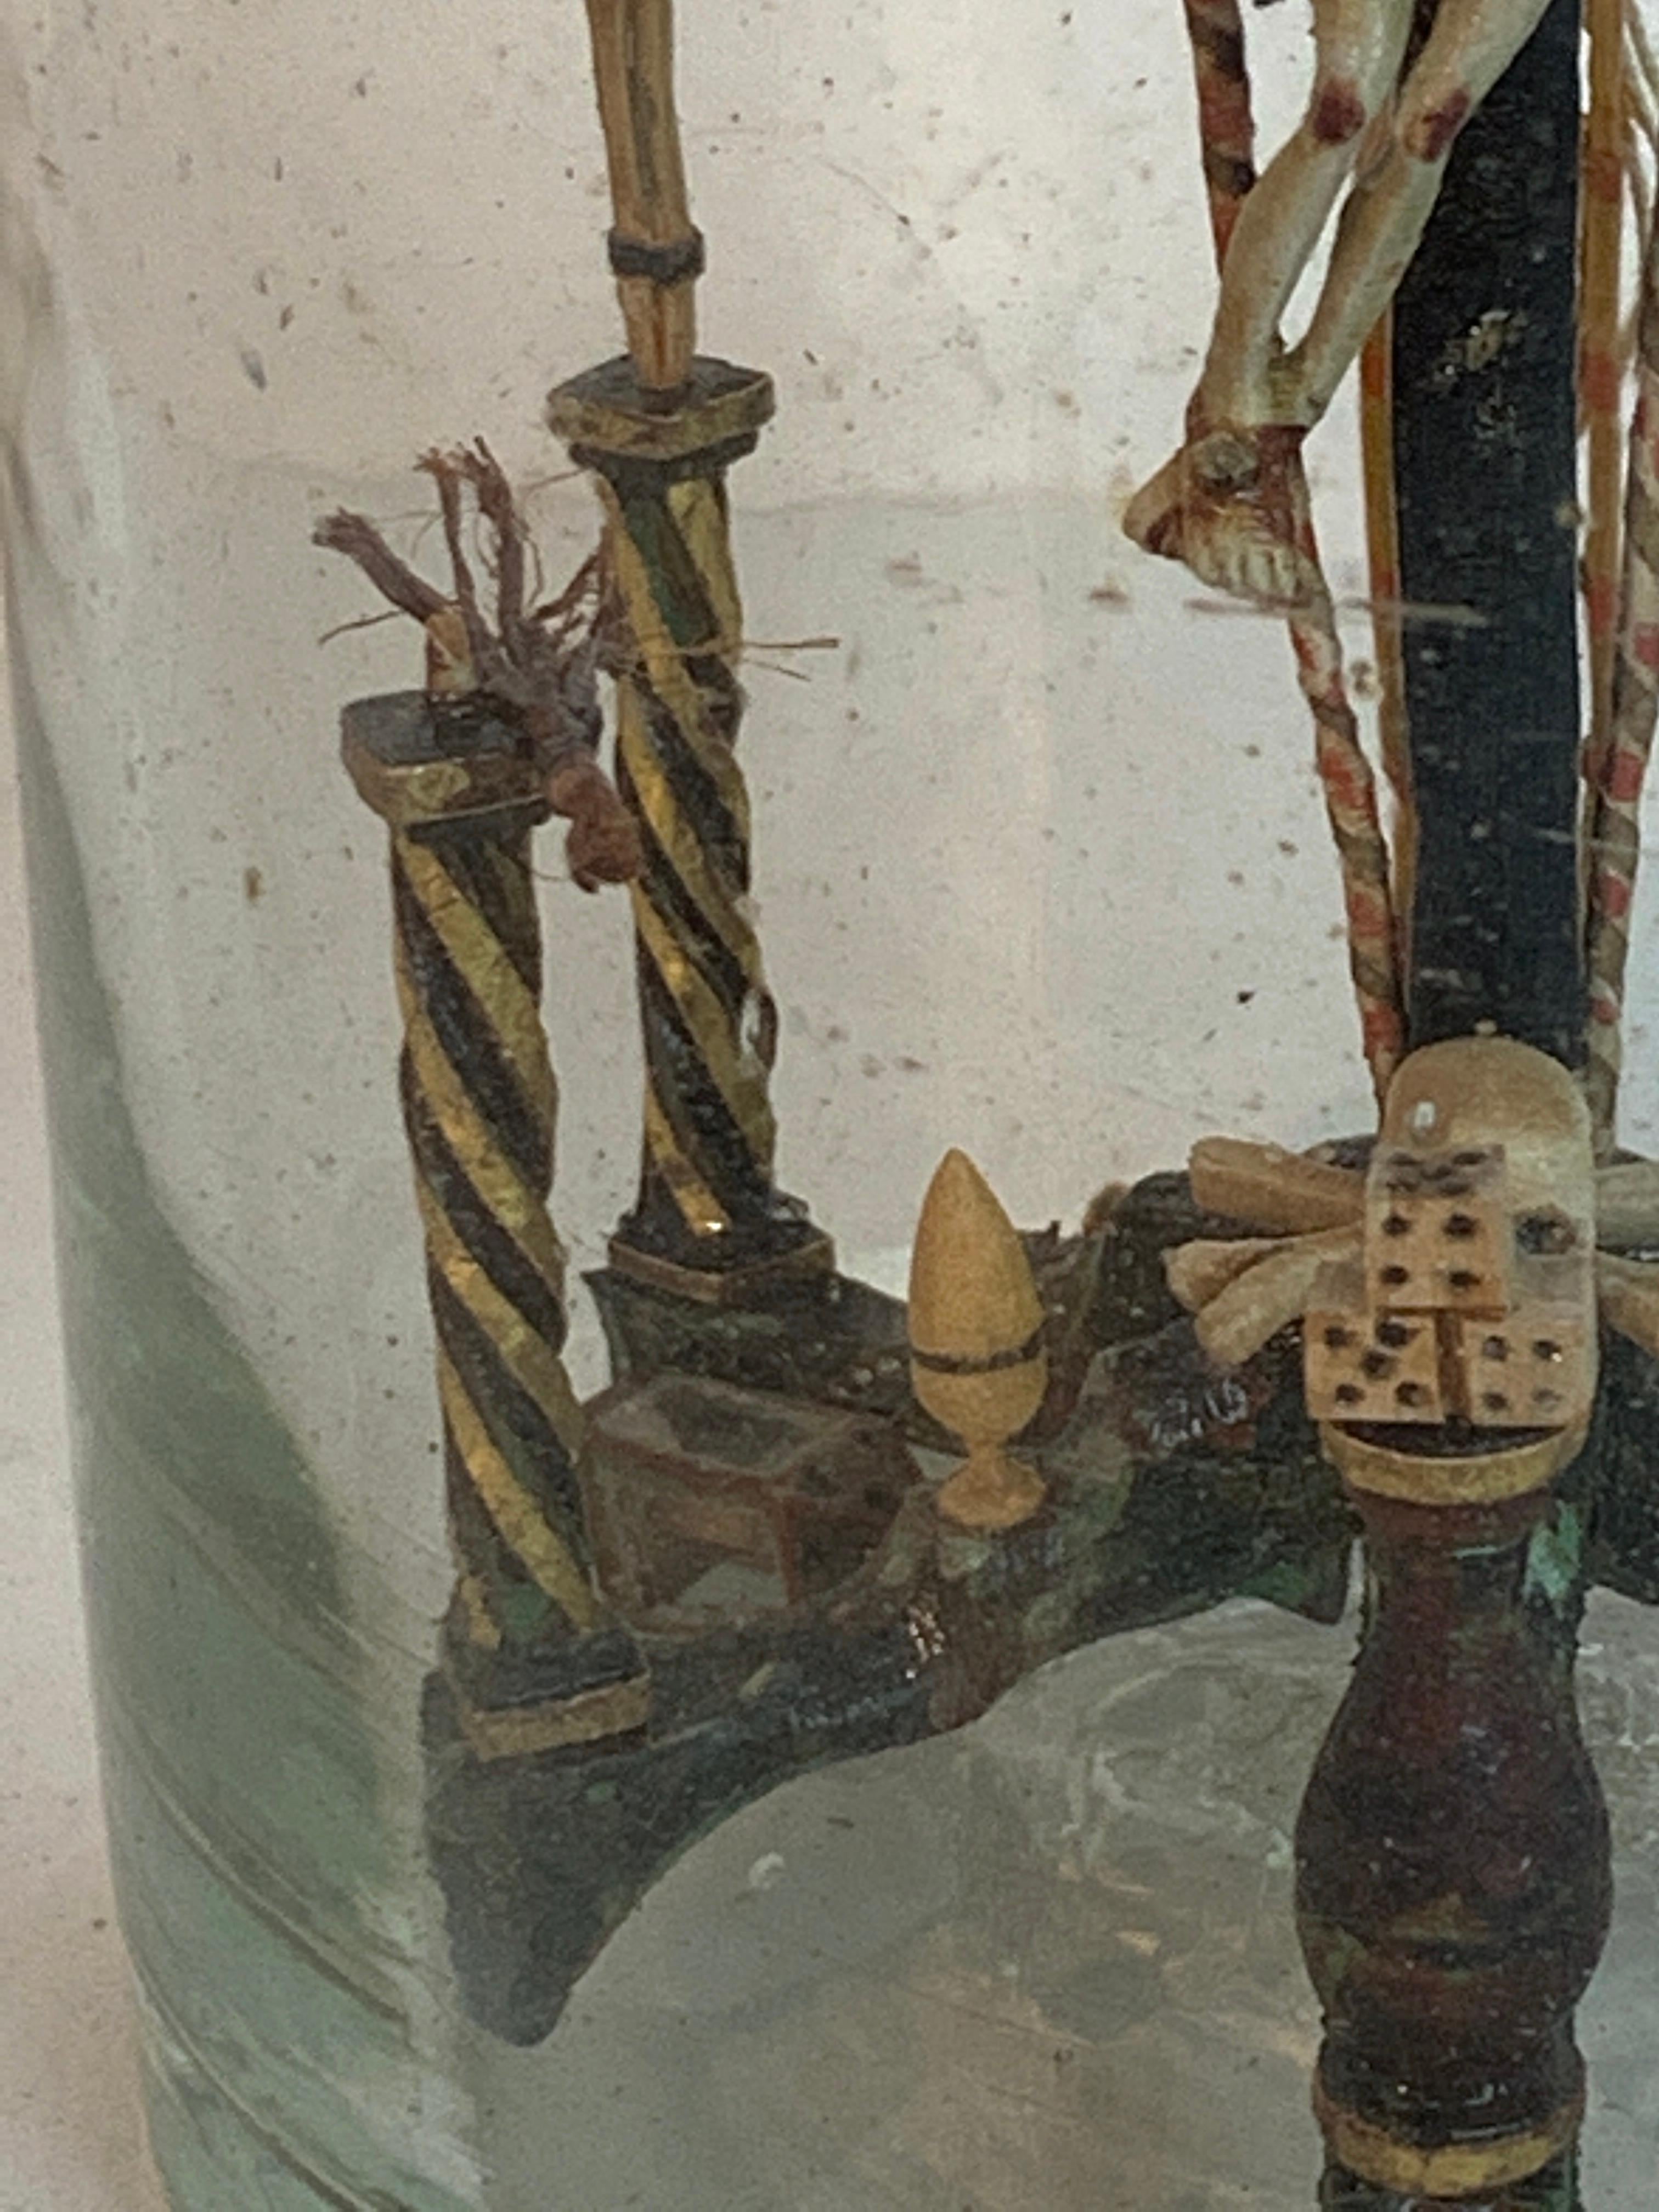 20th Century Folk Art Crucifixion Scene in a Bottle